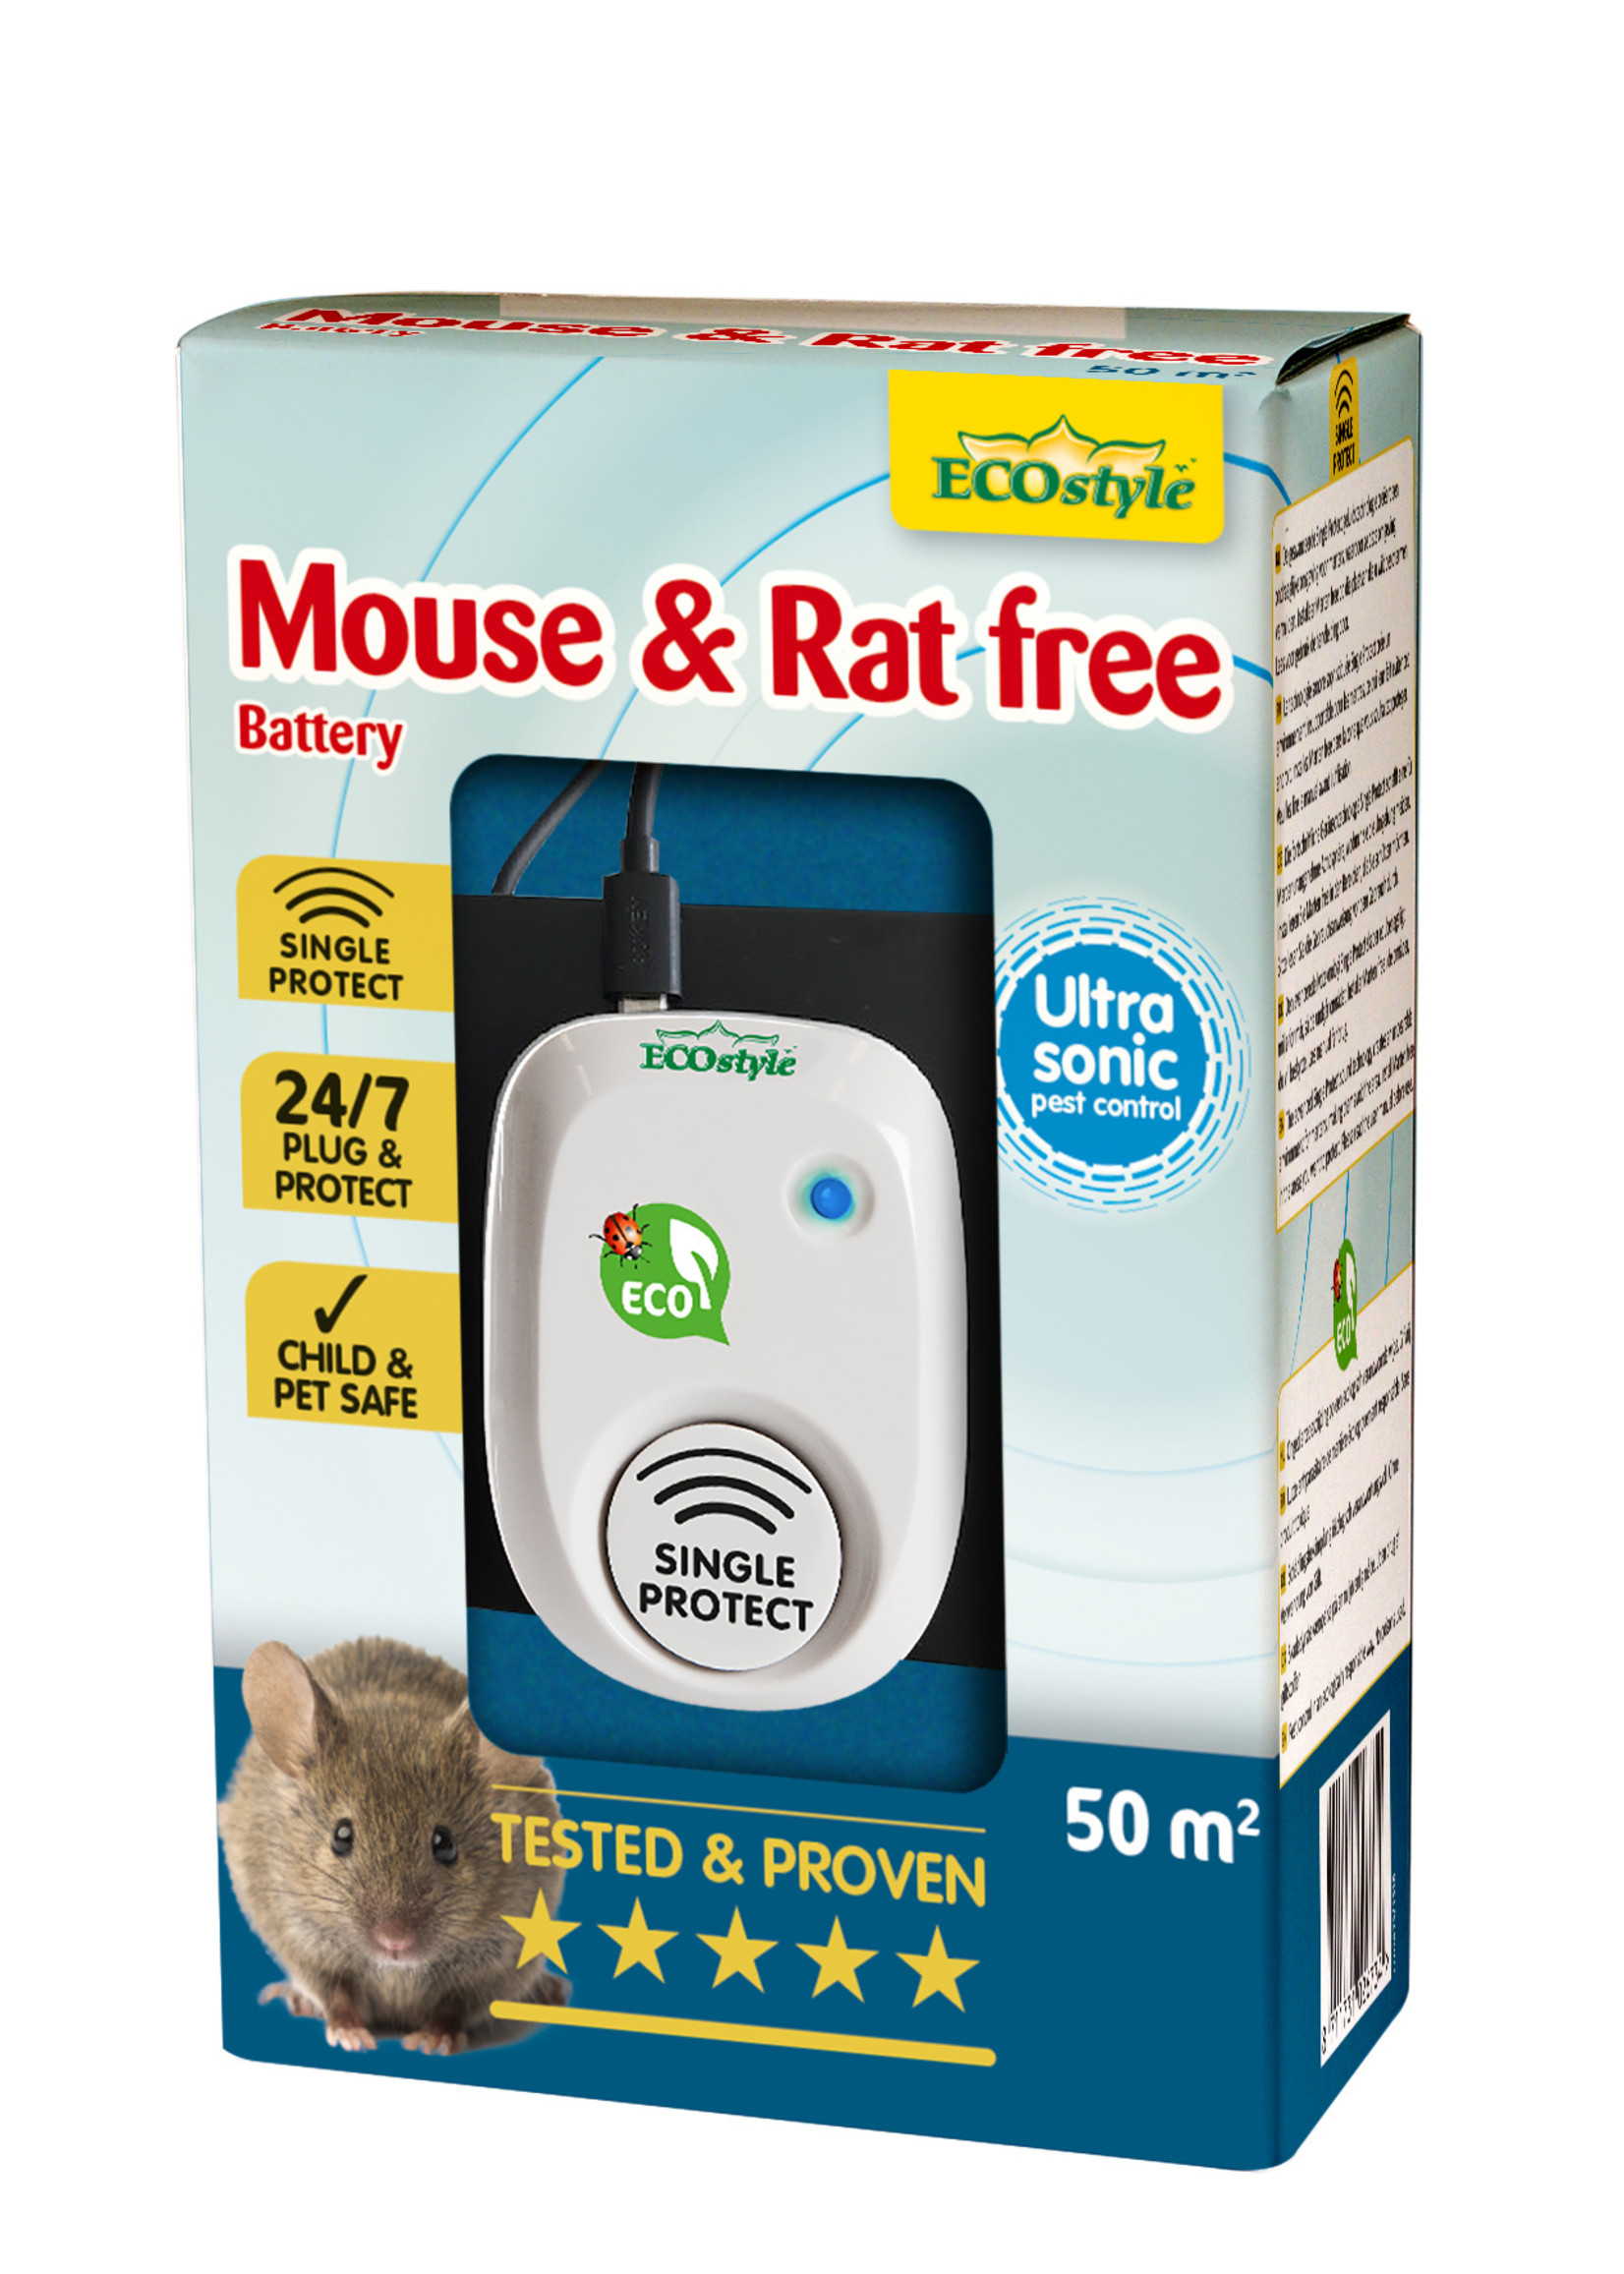 Ecostyle Mouse & rat free 50 battery